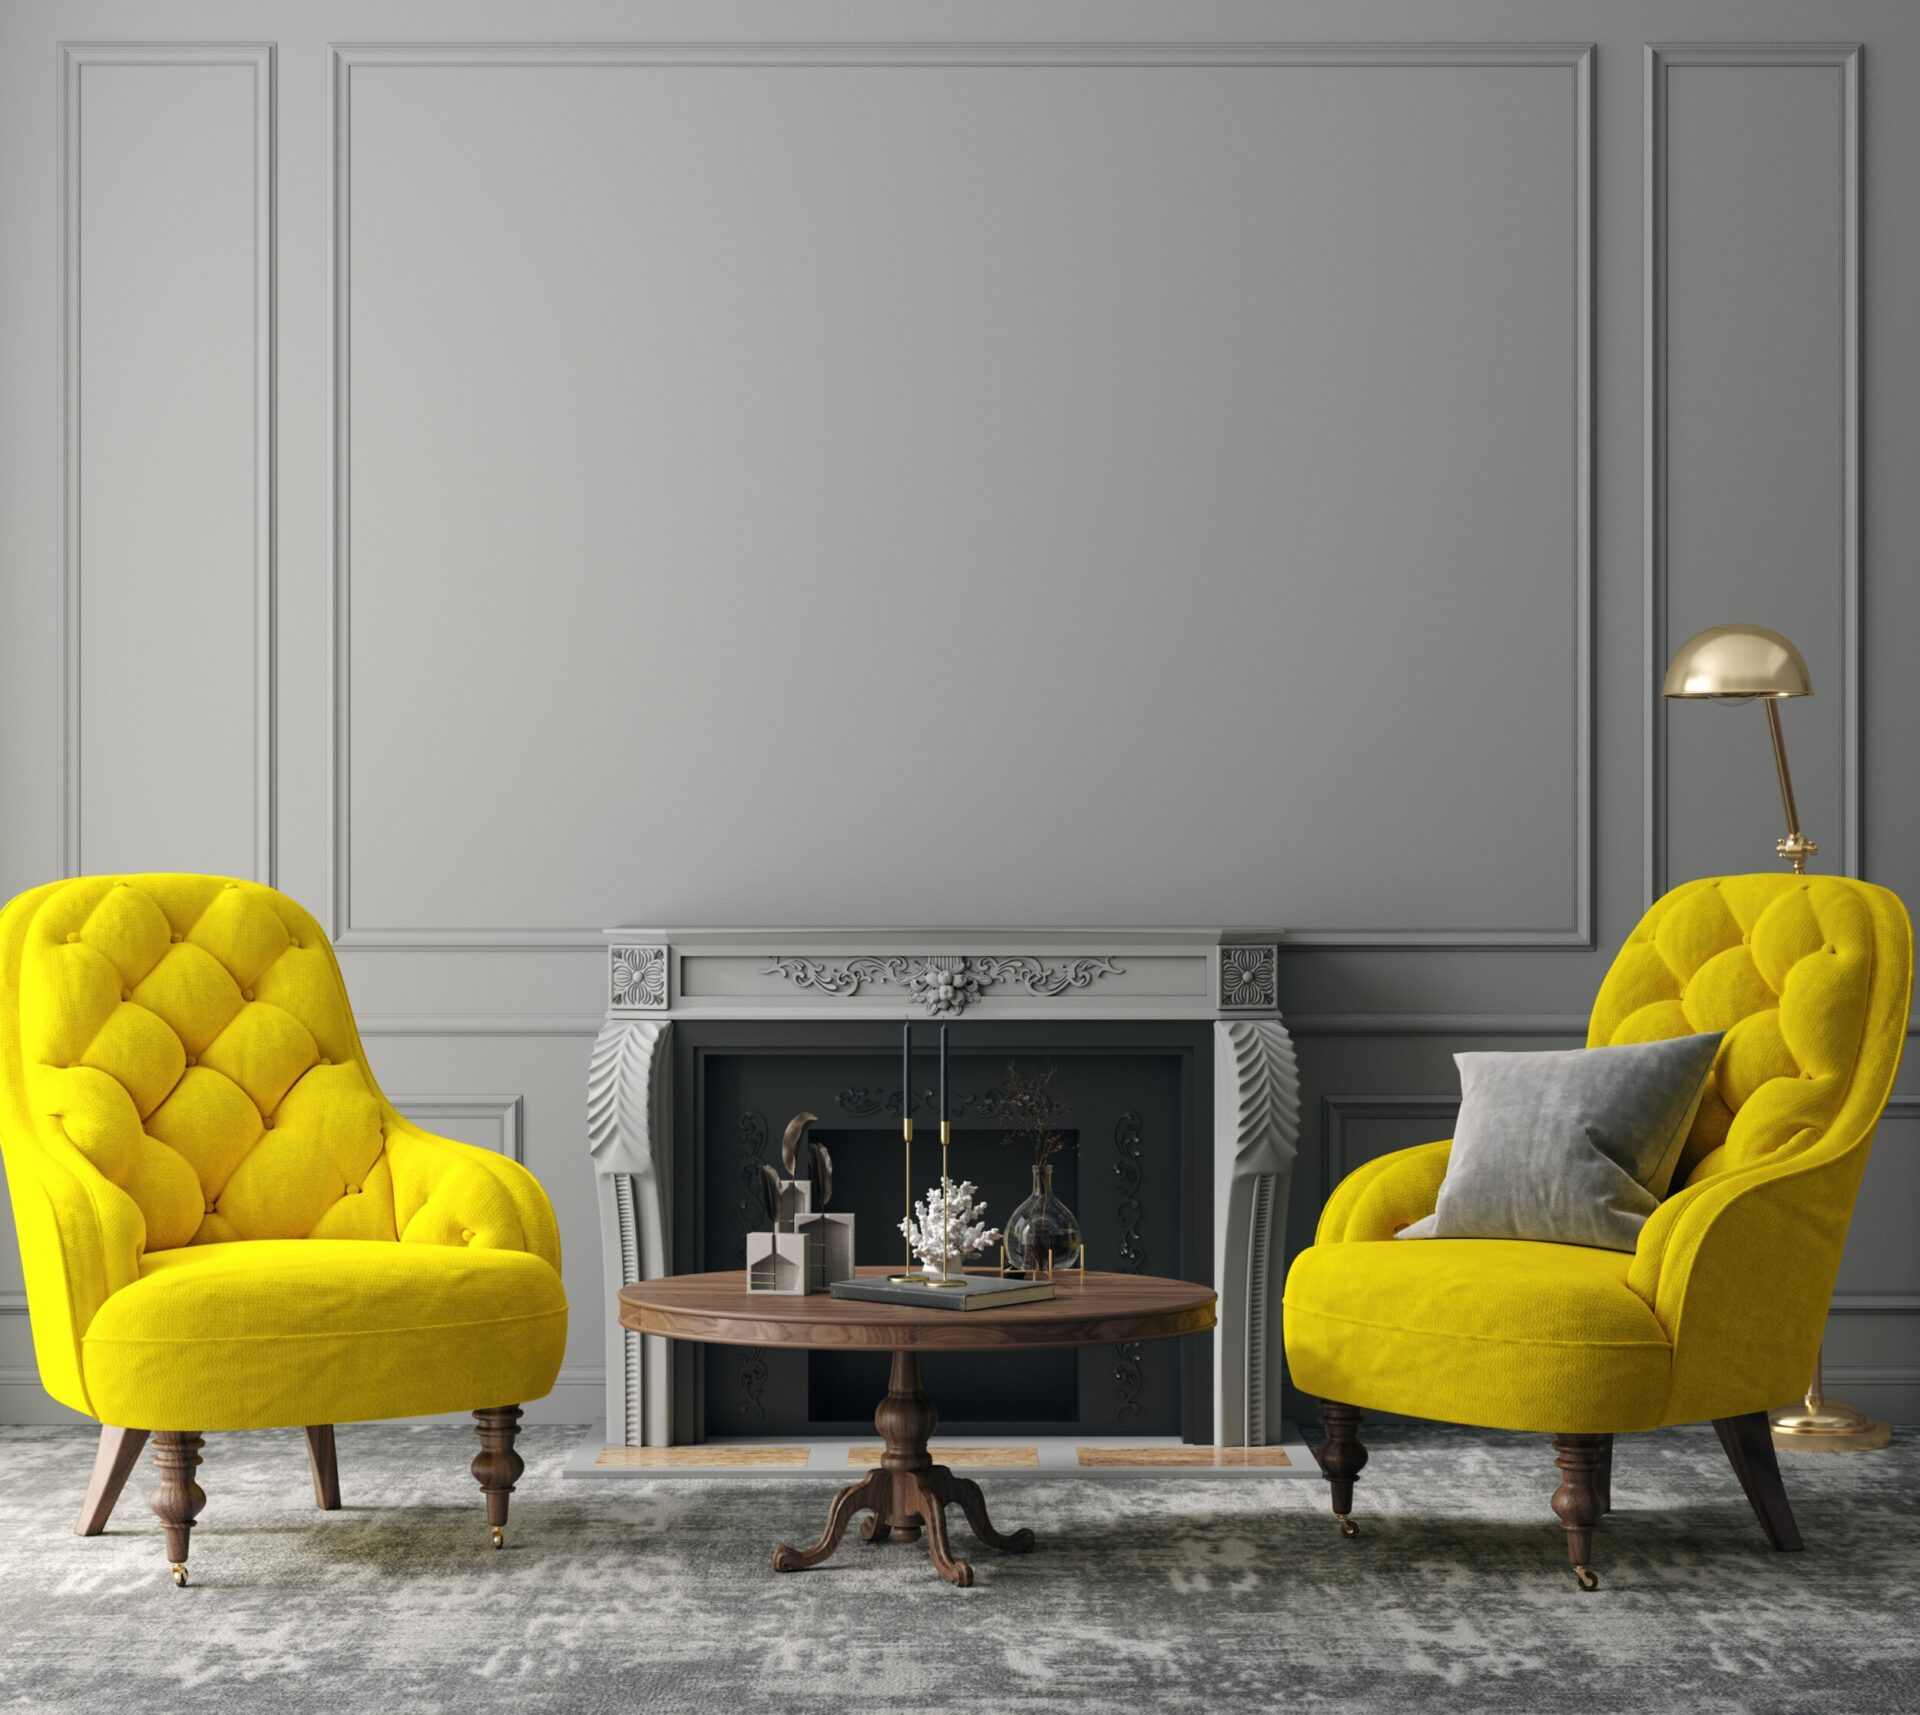 Elegant dark grey interior with bright yellow armchairs